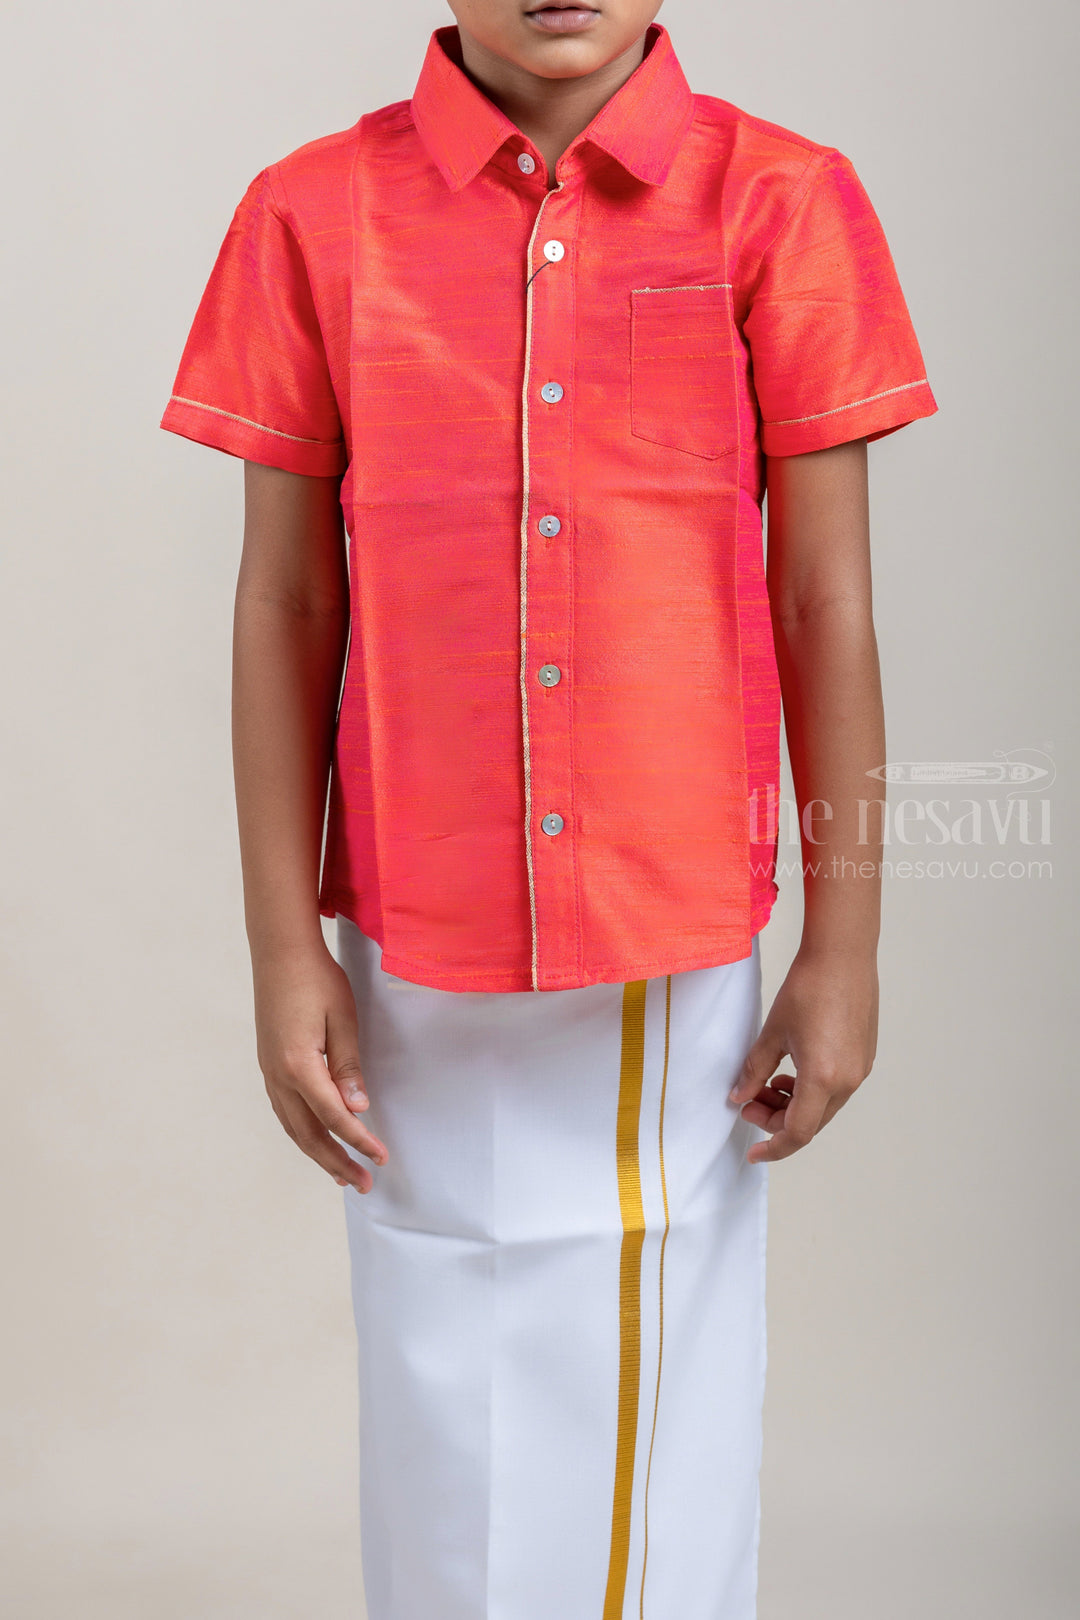 The Nesavu Boys Shirts Red Traditional Boys Pattu Silk Shirt psr silks Nesavu